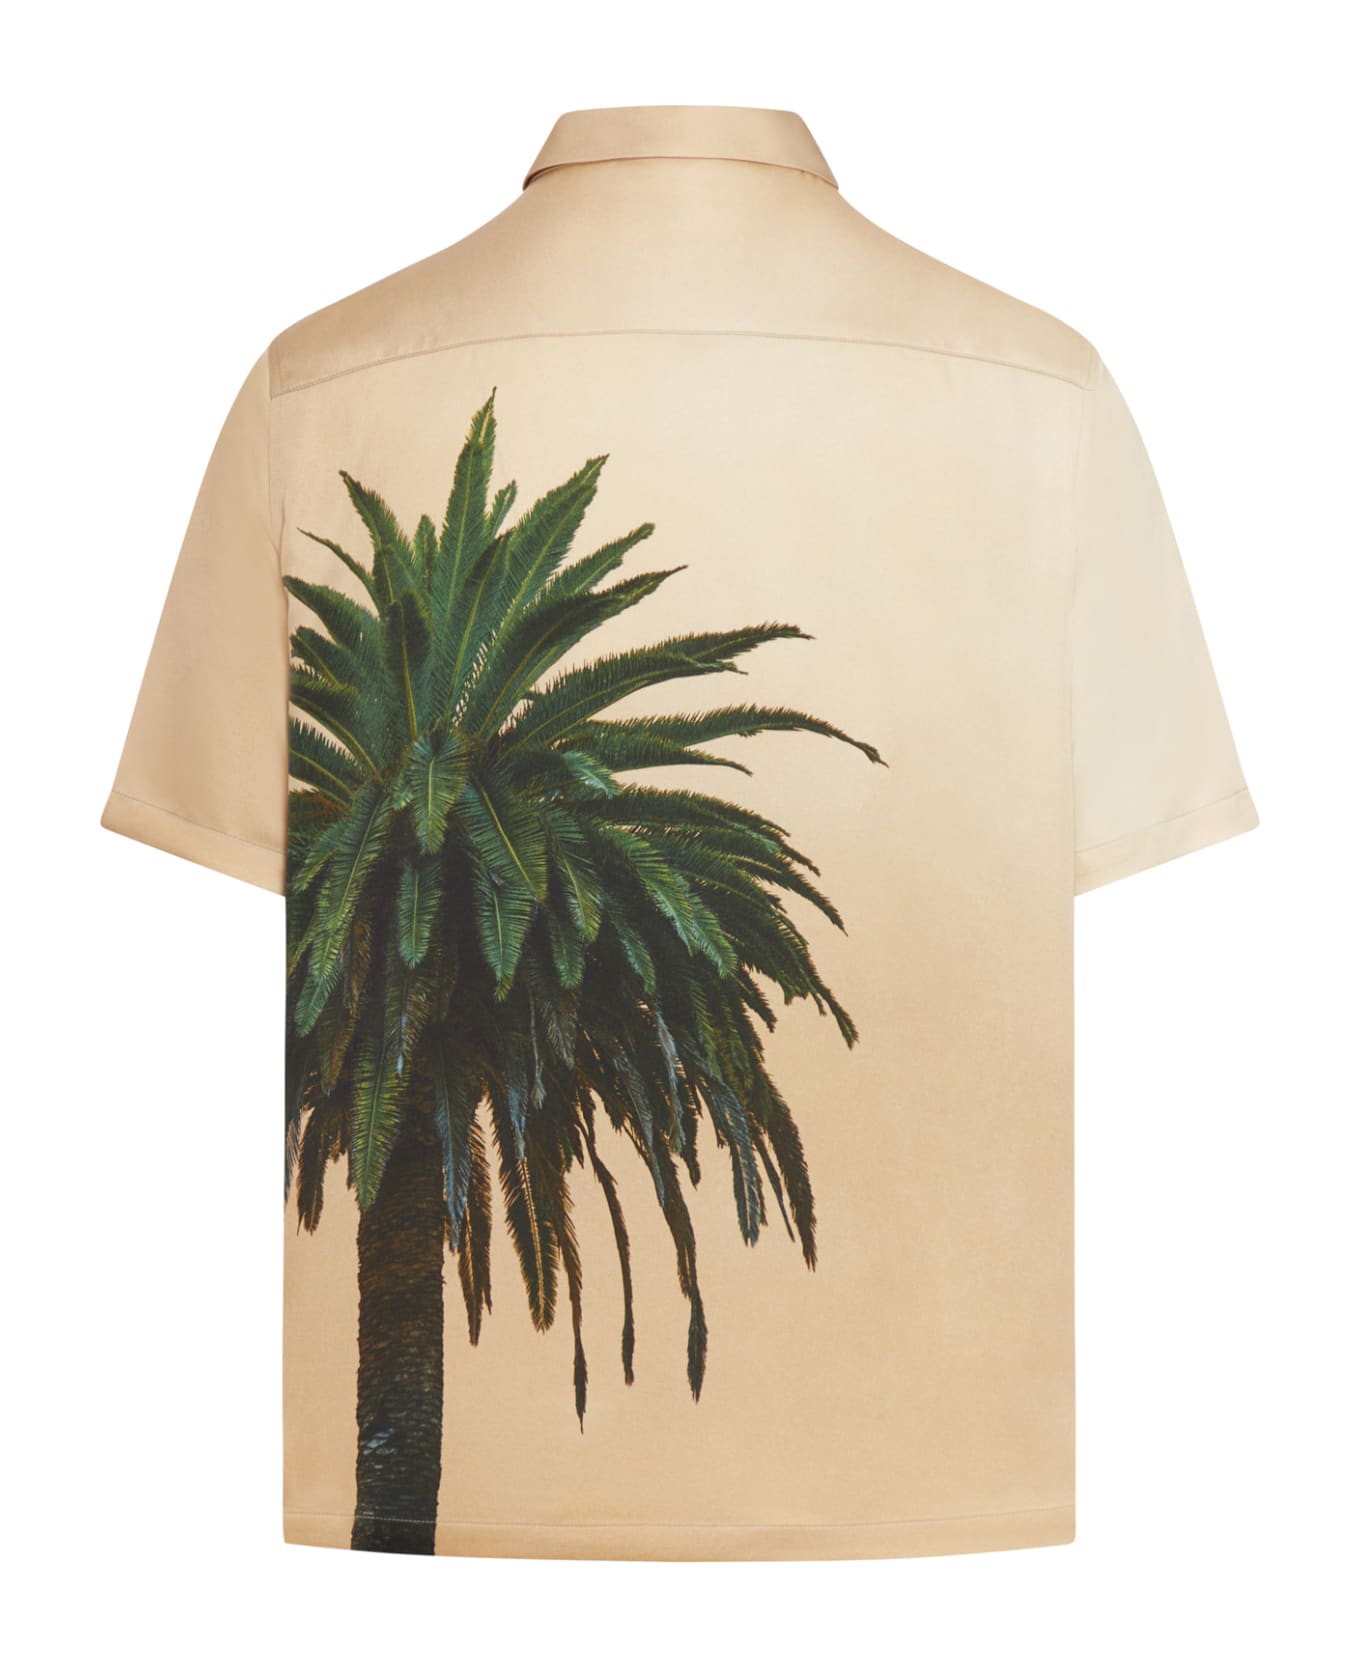 Blue Sky Inn Royal Palm Shirt - Travis Scott Fragment Air Jordan 1 Low Shirts